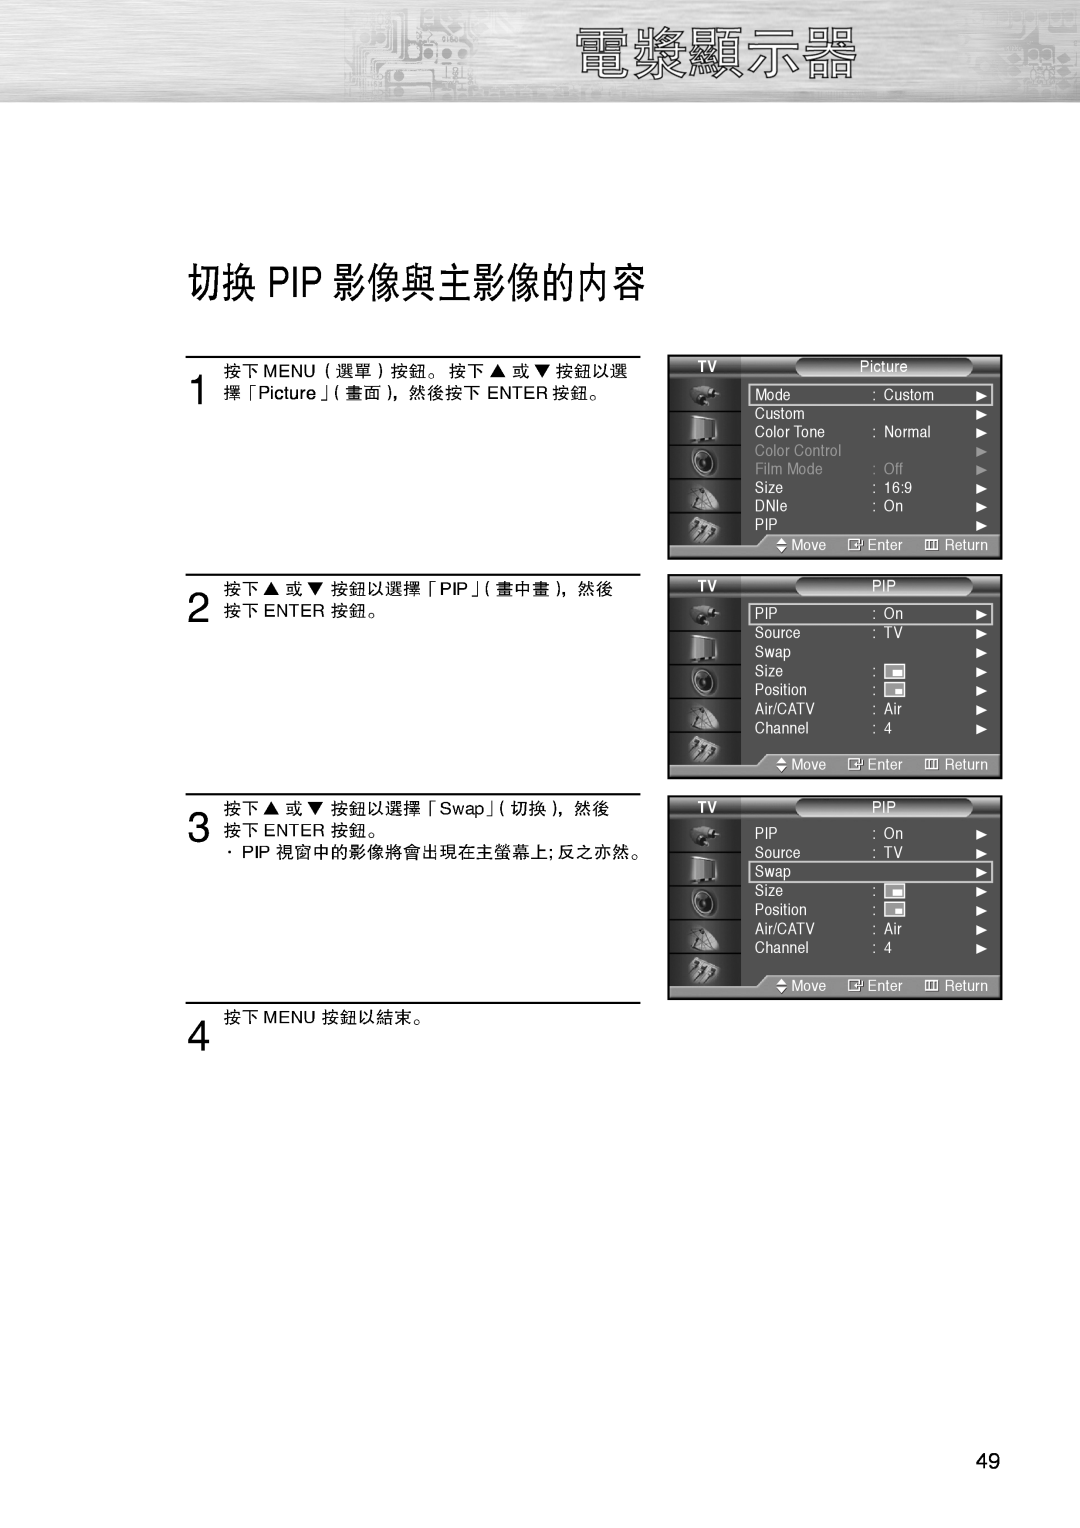 Samsung PL-42D4S manual Picture, Color Control, Film Mode 